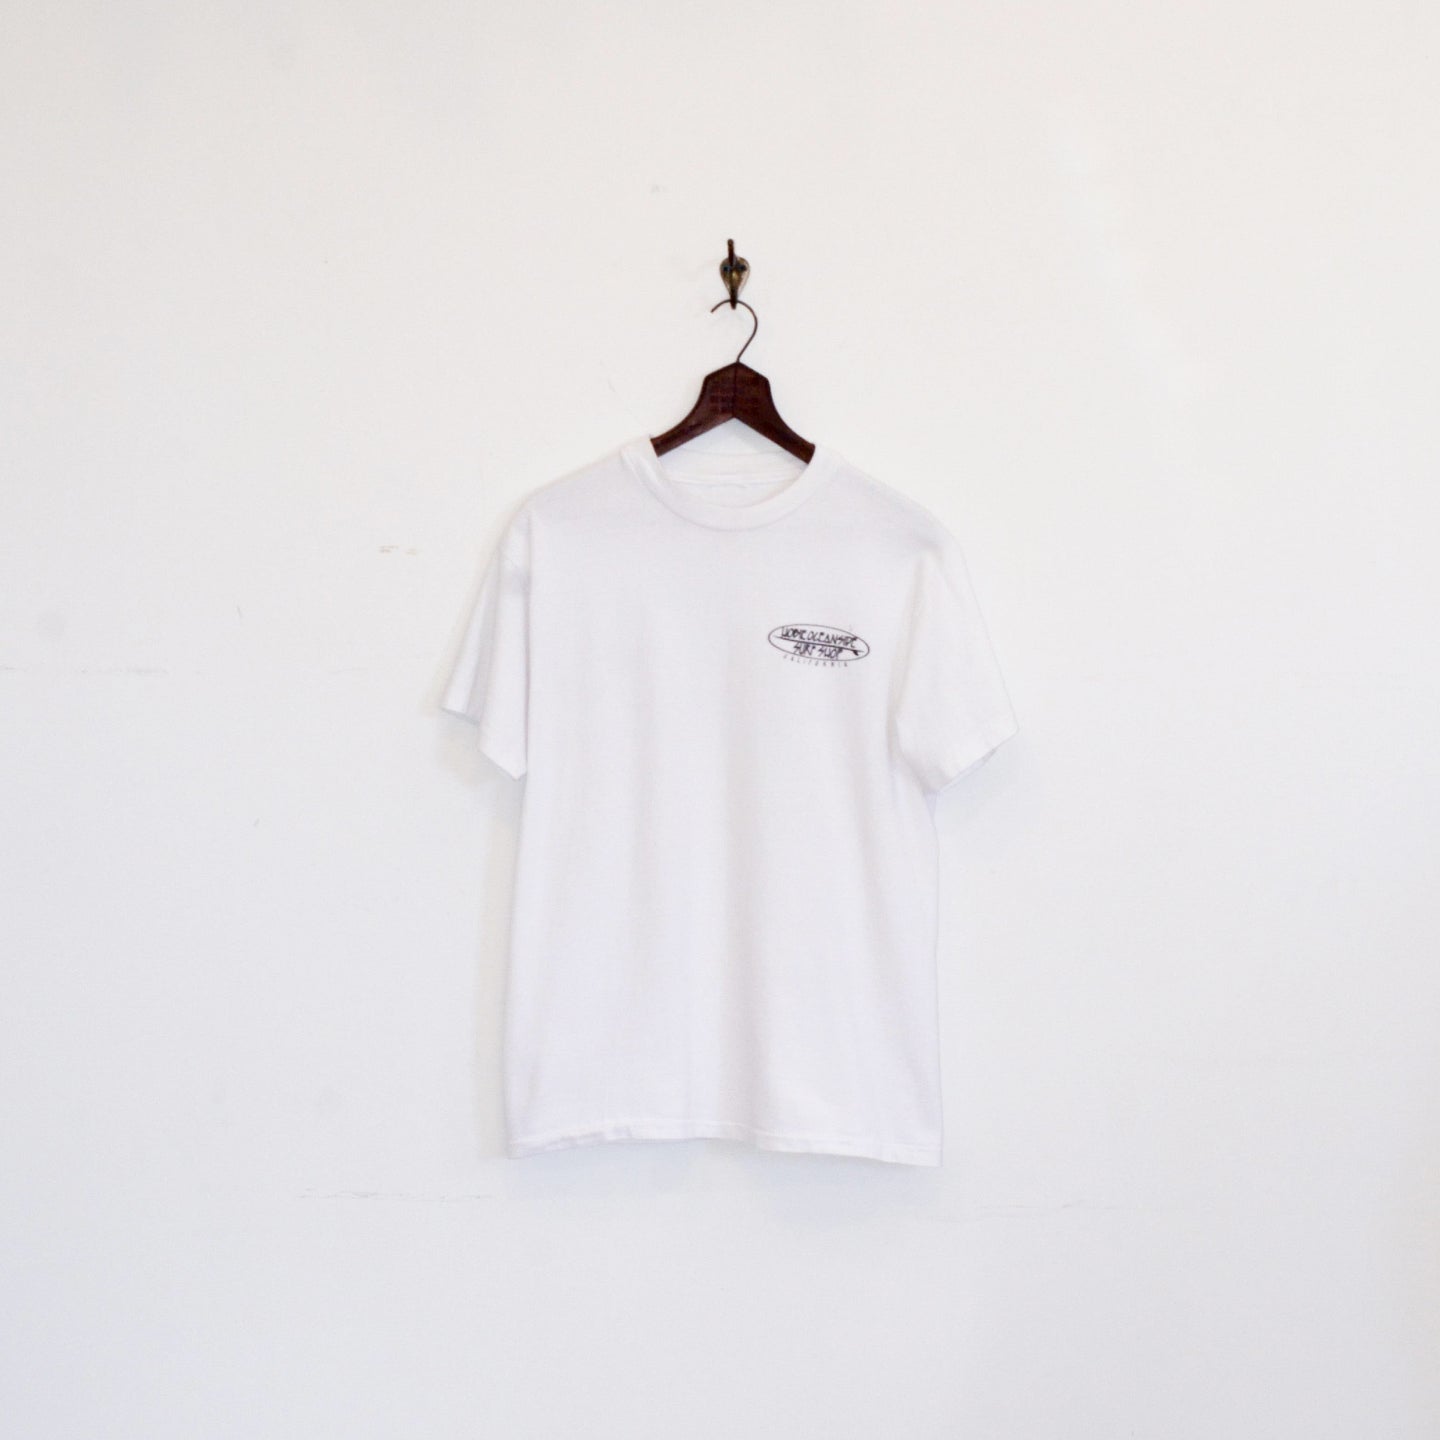 Unknown Brand - Hobie Oceanside Surf Shop Print Tee Shirt